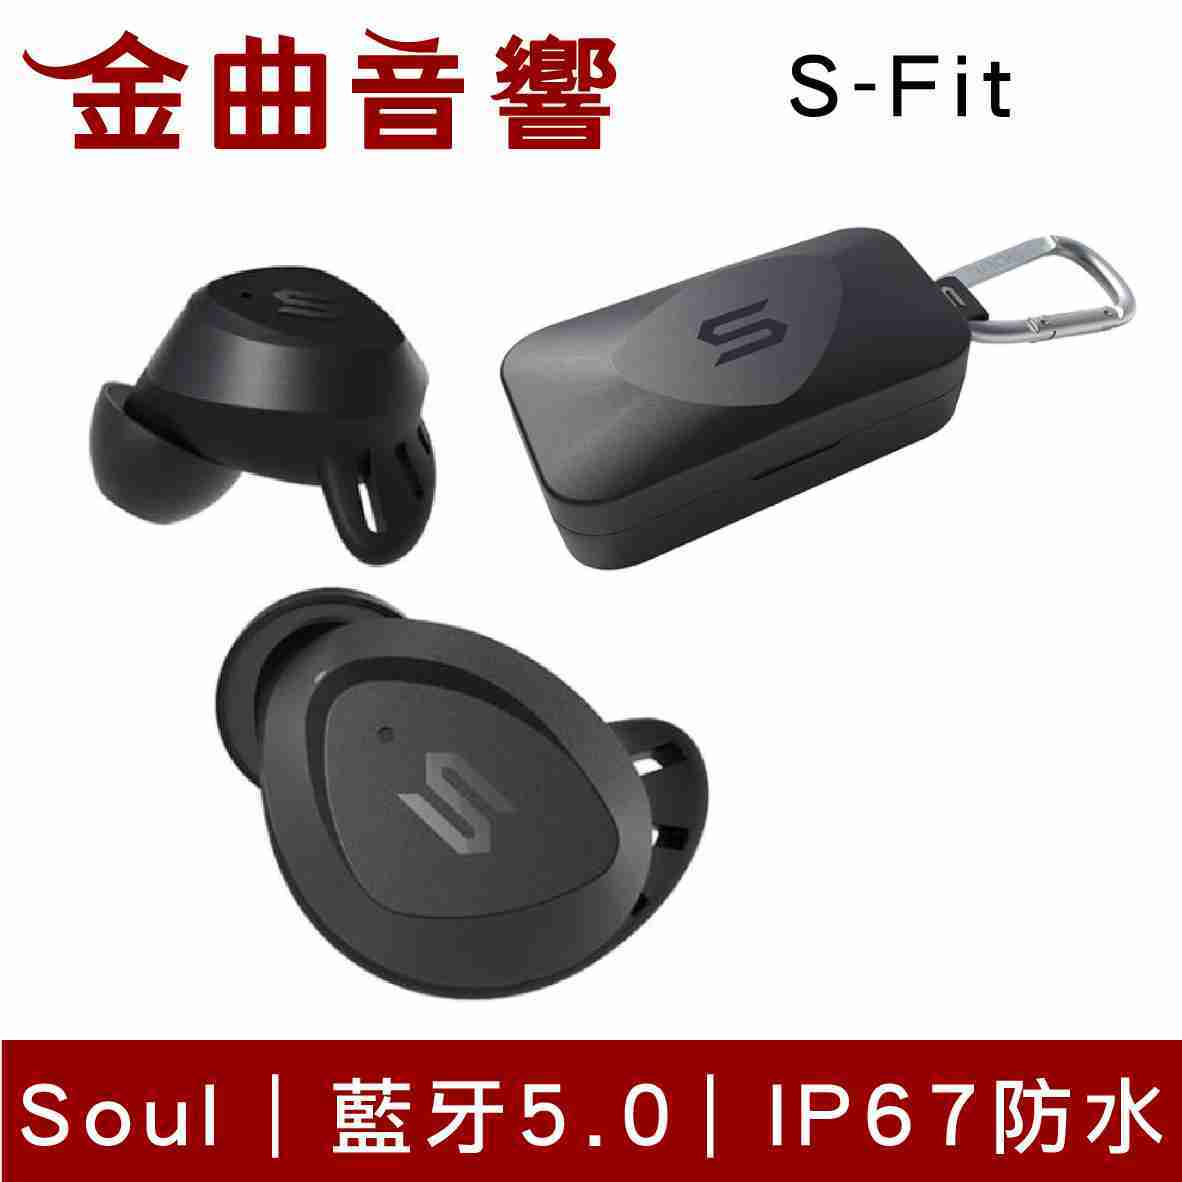 Soul S-Fit 黑 IP67 軍用級 防水 防塵 環境音效 藍芽 耳機 | 金曲音響